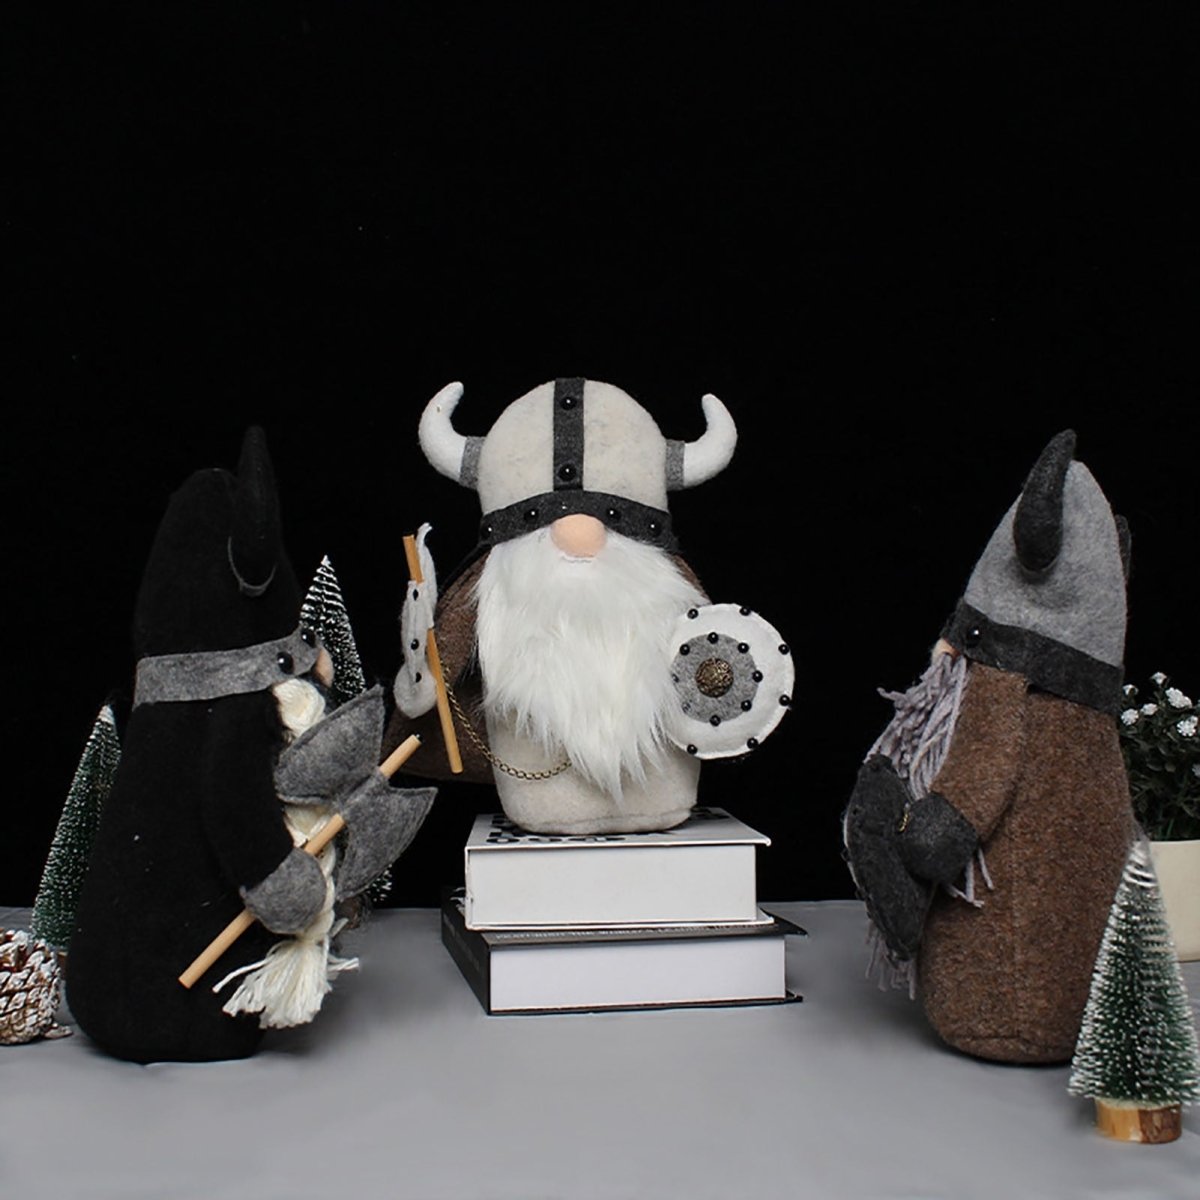 Viking Faceless Gnome Dolls - Wicked Mystics